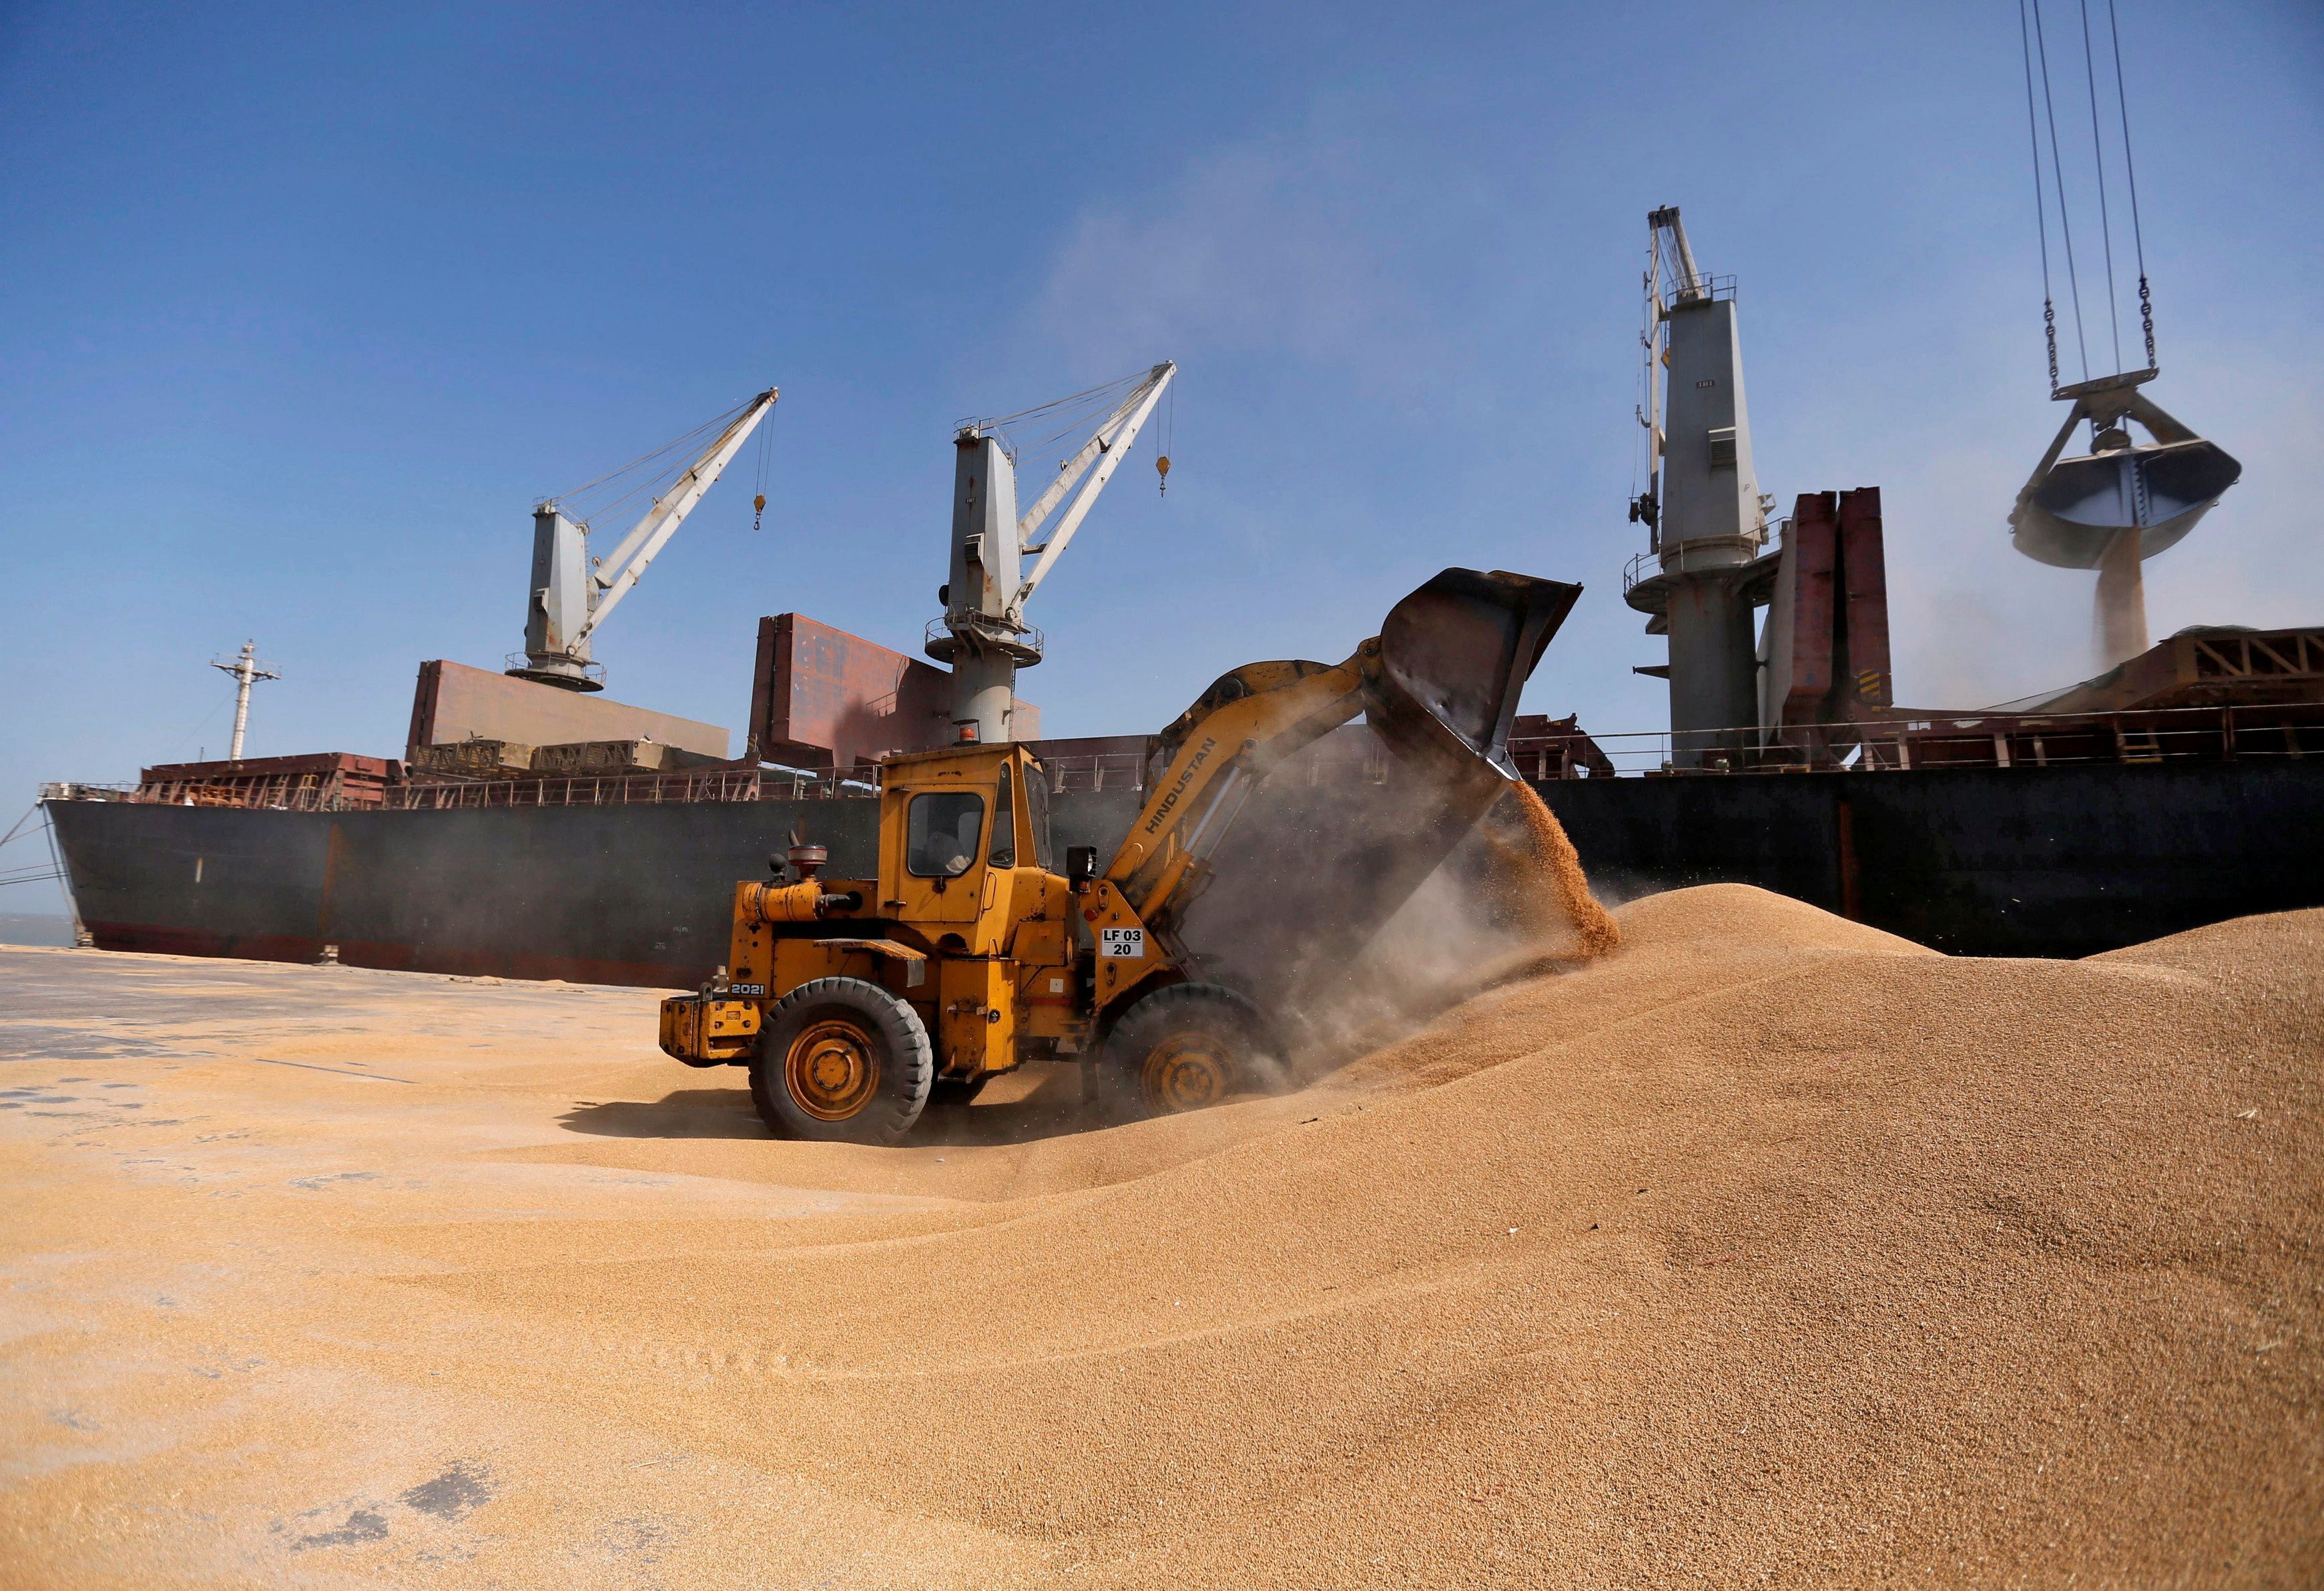 A dozer unloads wheat next to a ship at Mundra Port, in Gujarat